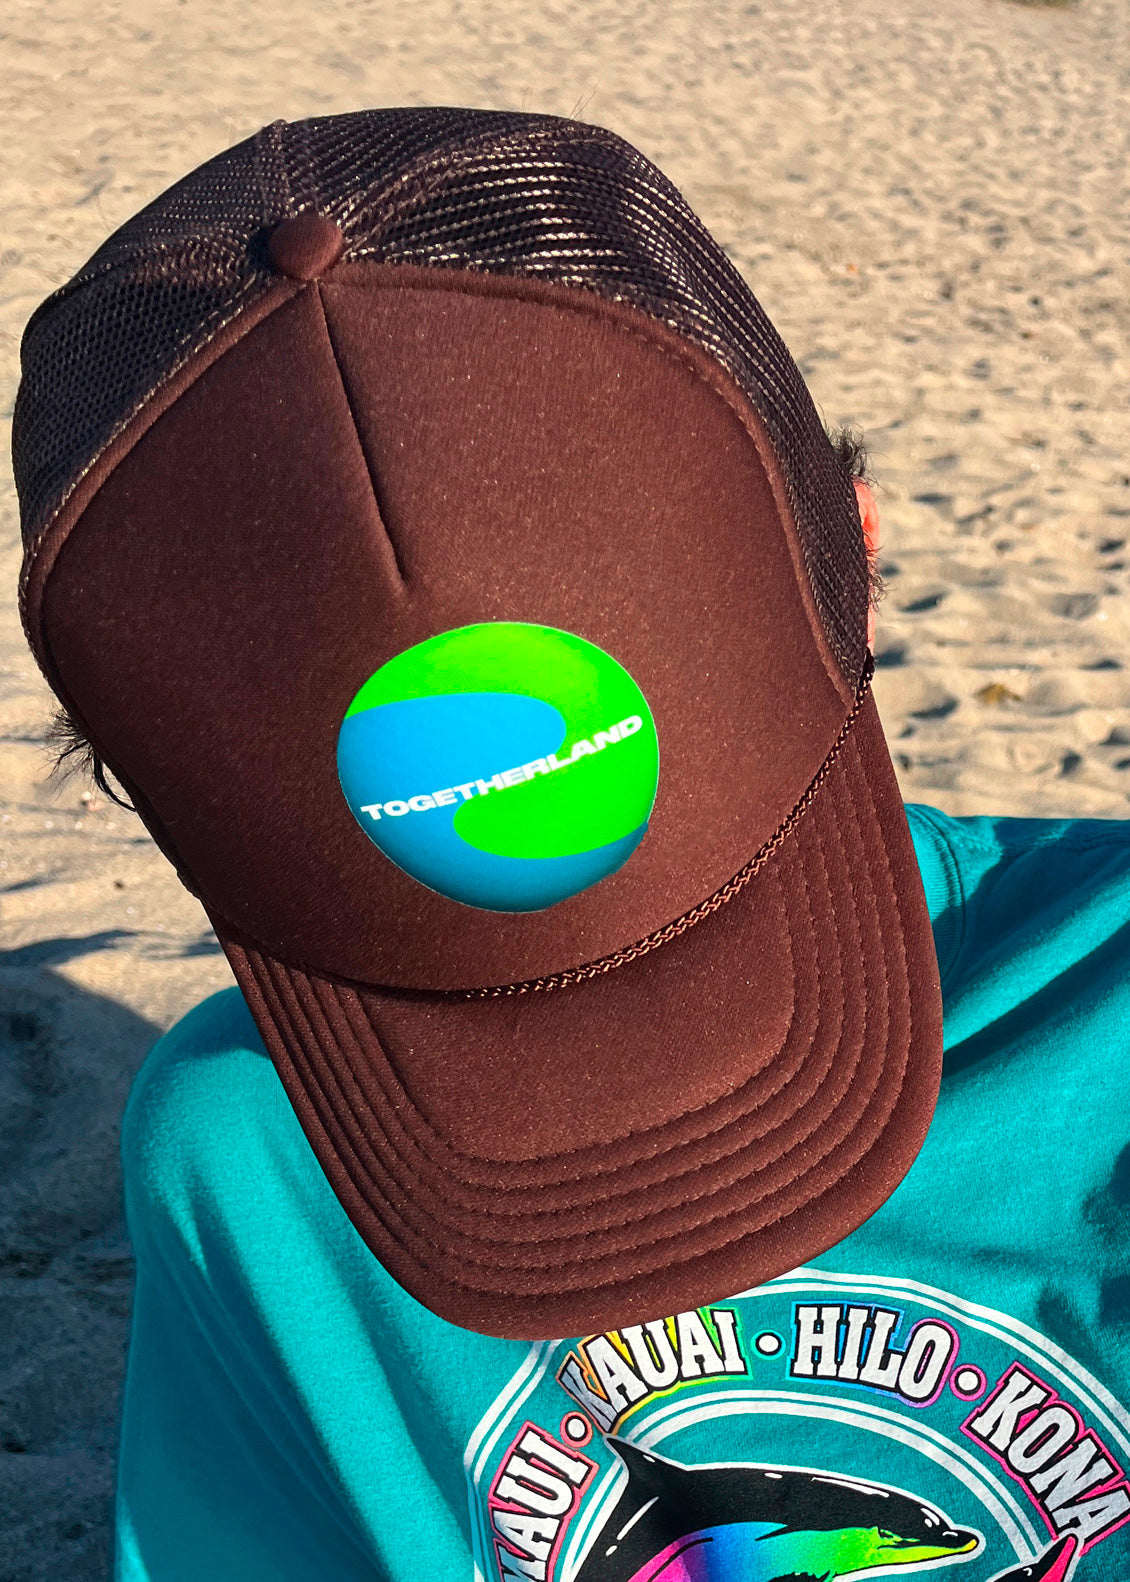 Togetherland Beach Hat